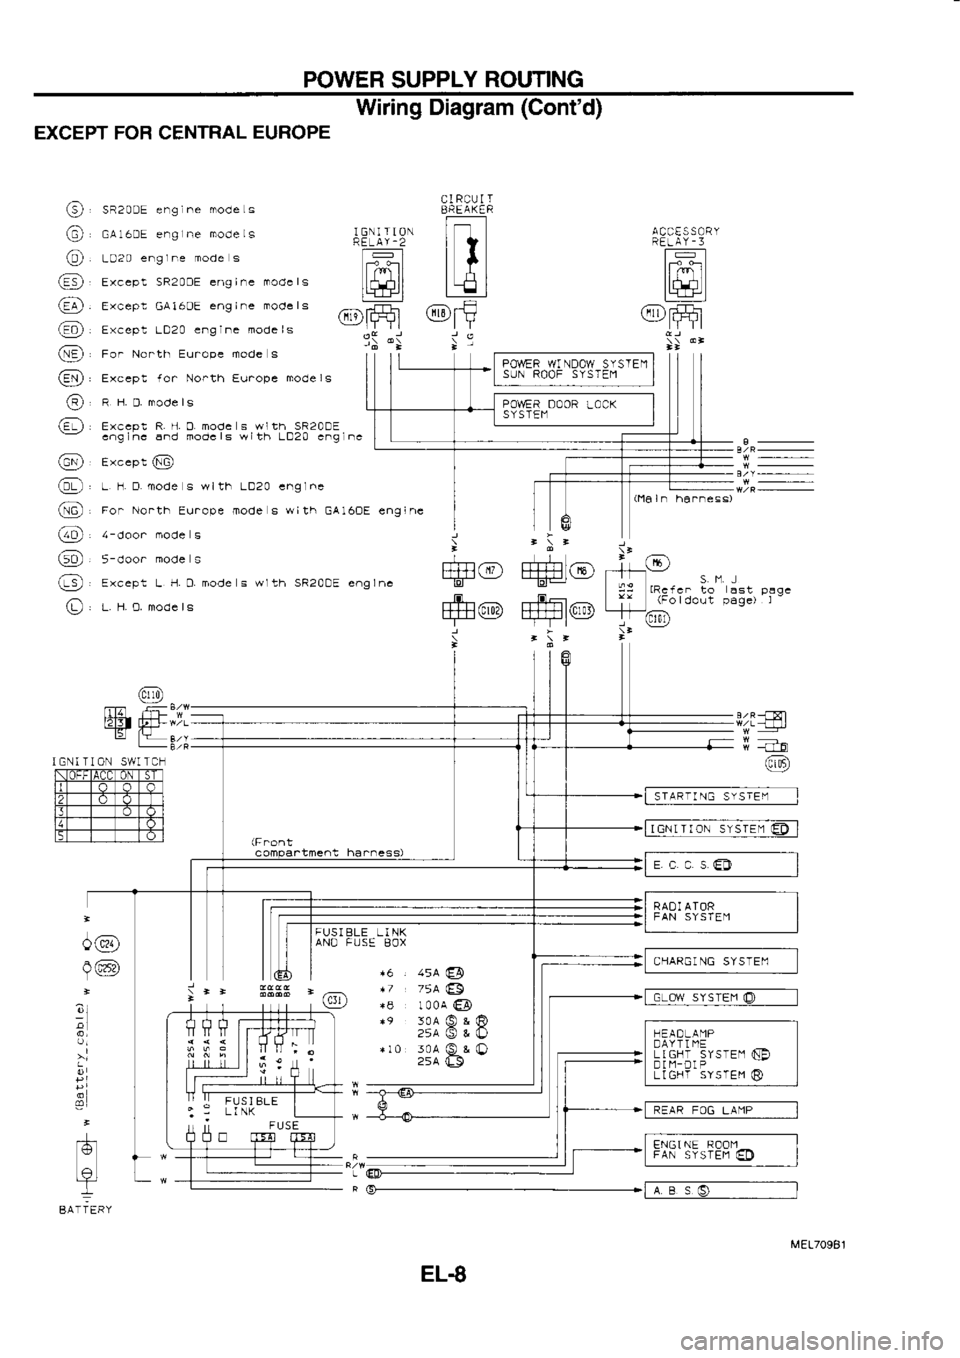 NISSAN SERENA 1993  Service Repair Manual POWER 
SUPPLY  ROUTING
Wiring  Diagram  (Contd)
EXCEPT  FOR CENTRAL  EUROPE
aa
(6\
(6\
@
G;\
@
@ \T/
.a-\ f,ceo!  R J.O 
Todc  s 6 
ti  5a20DL
e.g.c  E.o Foocls 
w 
tr  -D20  e^g.c
@  e,..pt 
6
@, 